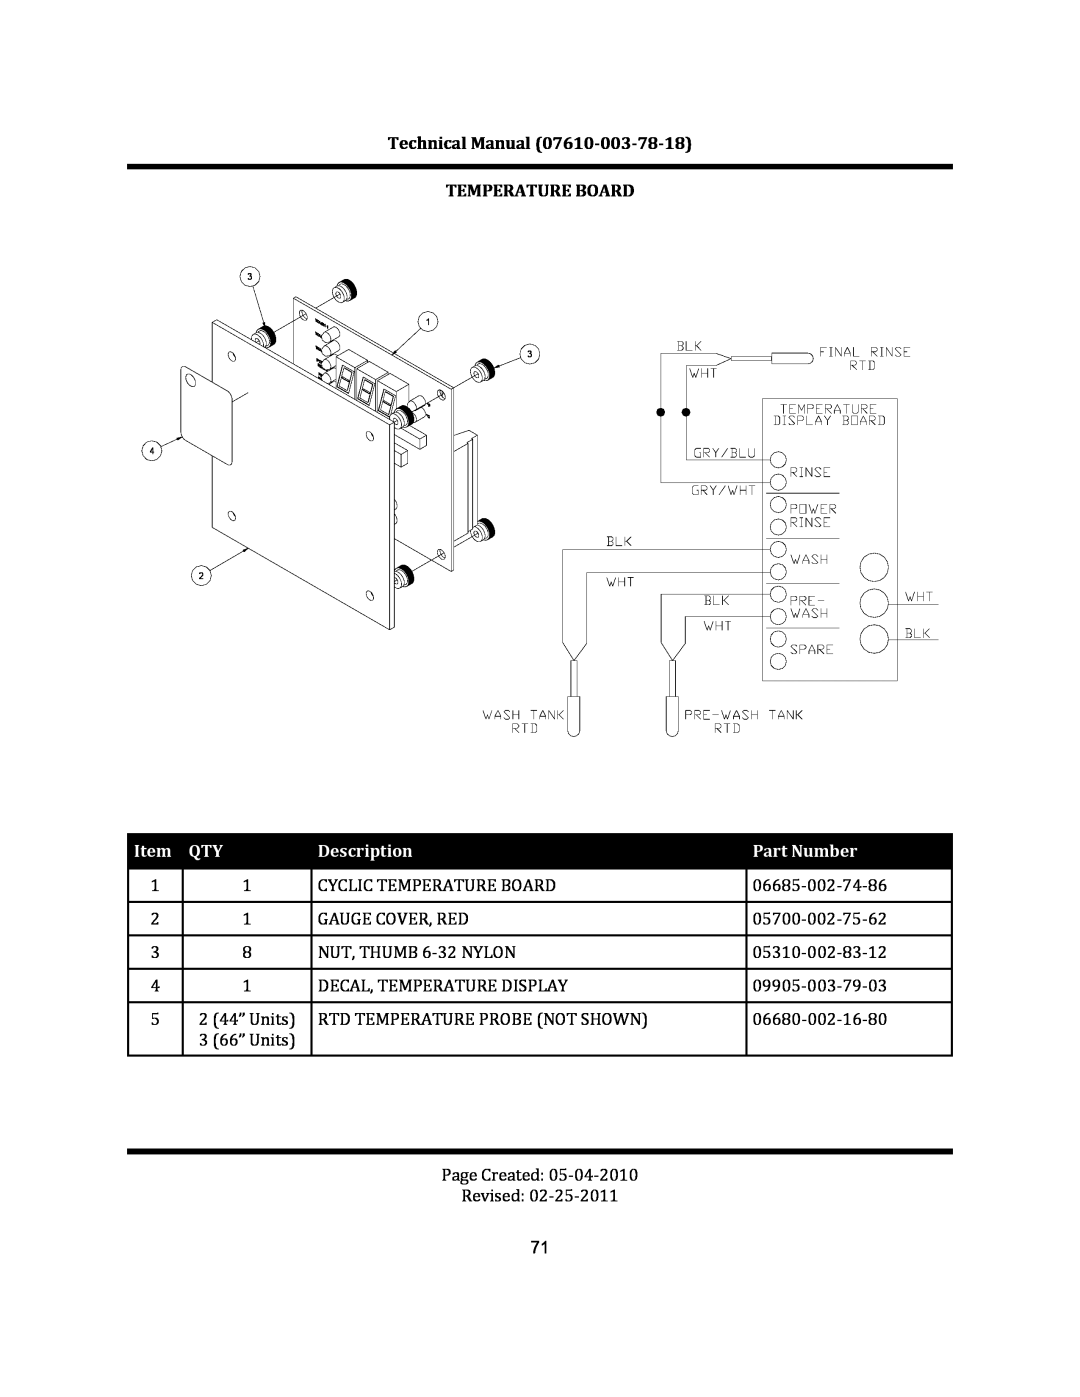 Jackson CREW 44S, CREW 66S manual Technical Manual 07610‐003‐78‐18 TEMPERATURE BOARD, Description, Part Number 